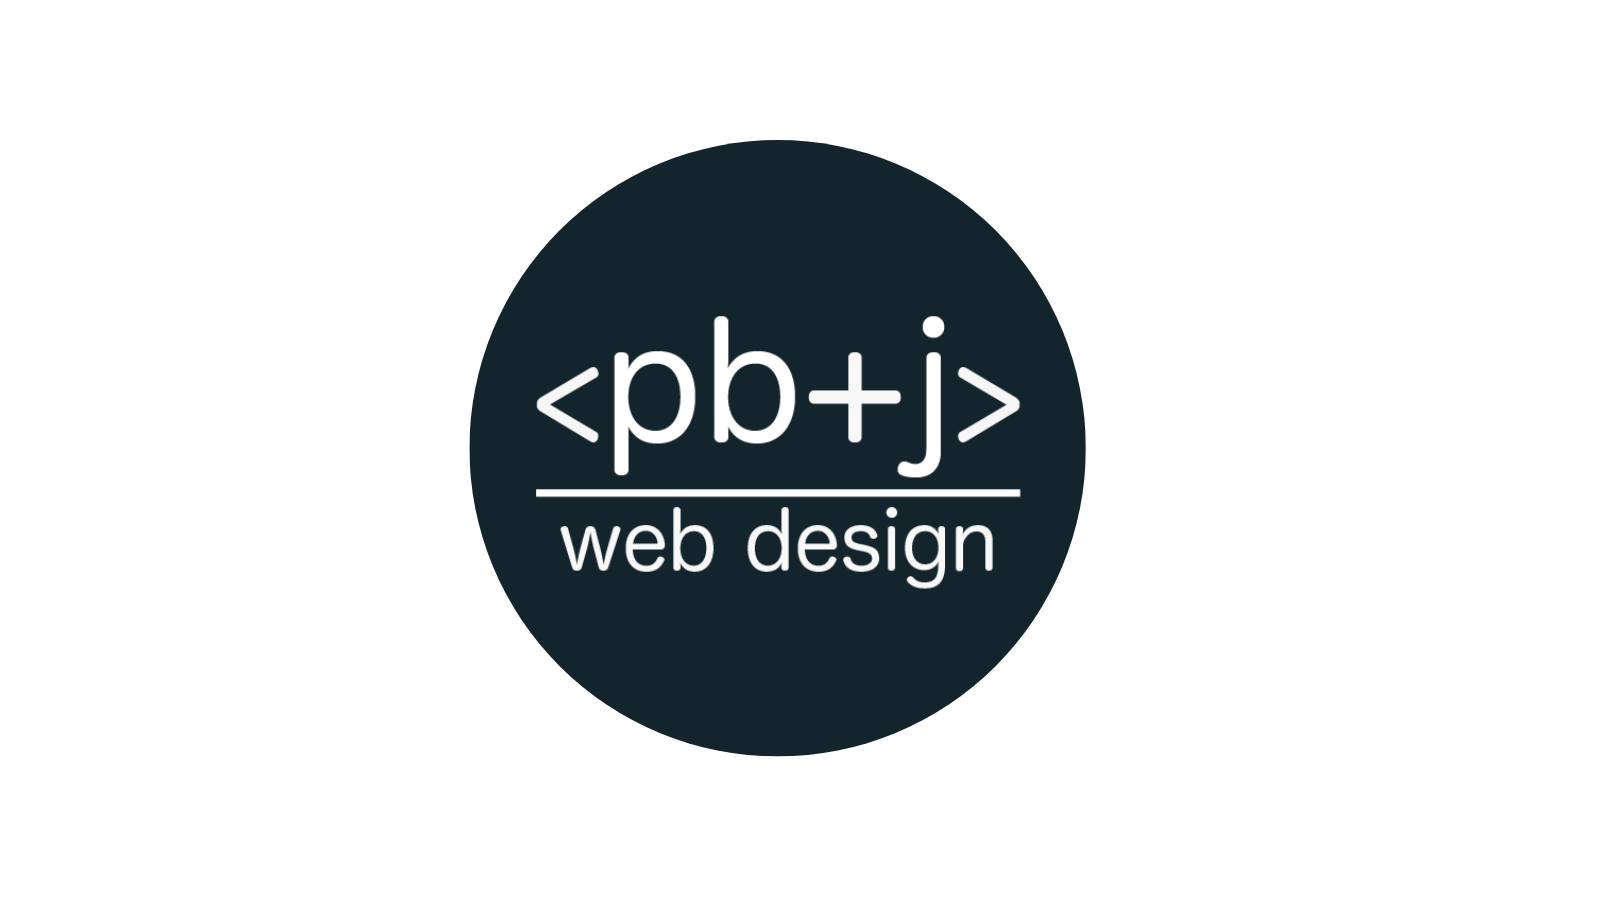 PB&J web design logo.